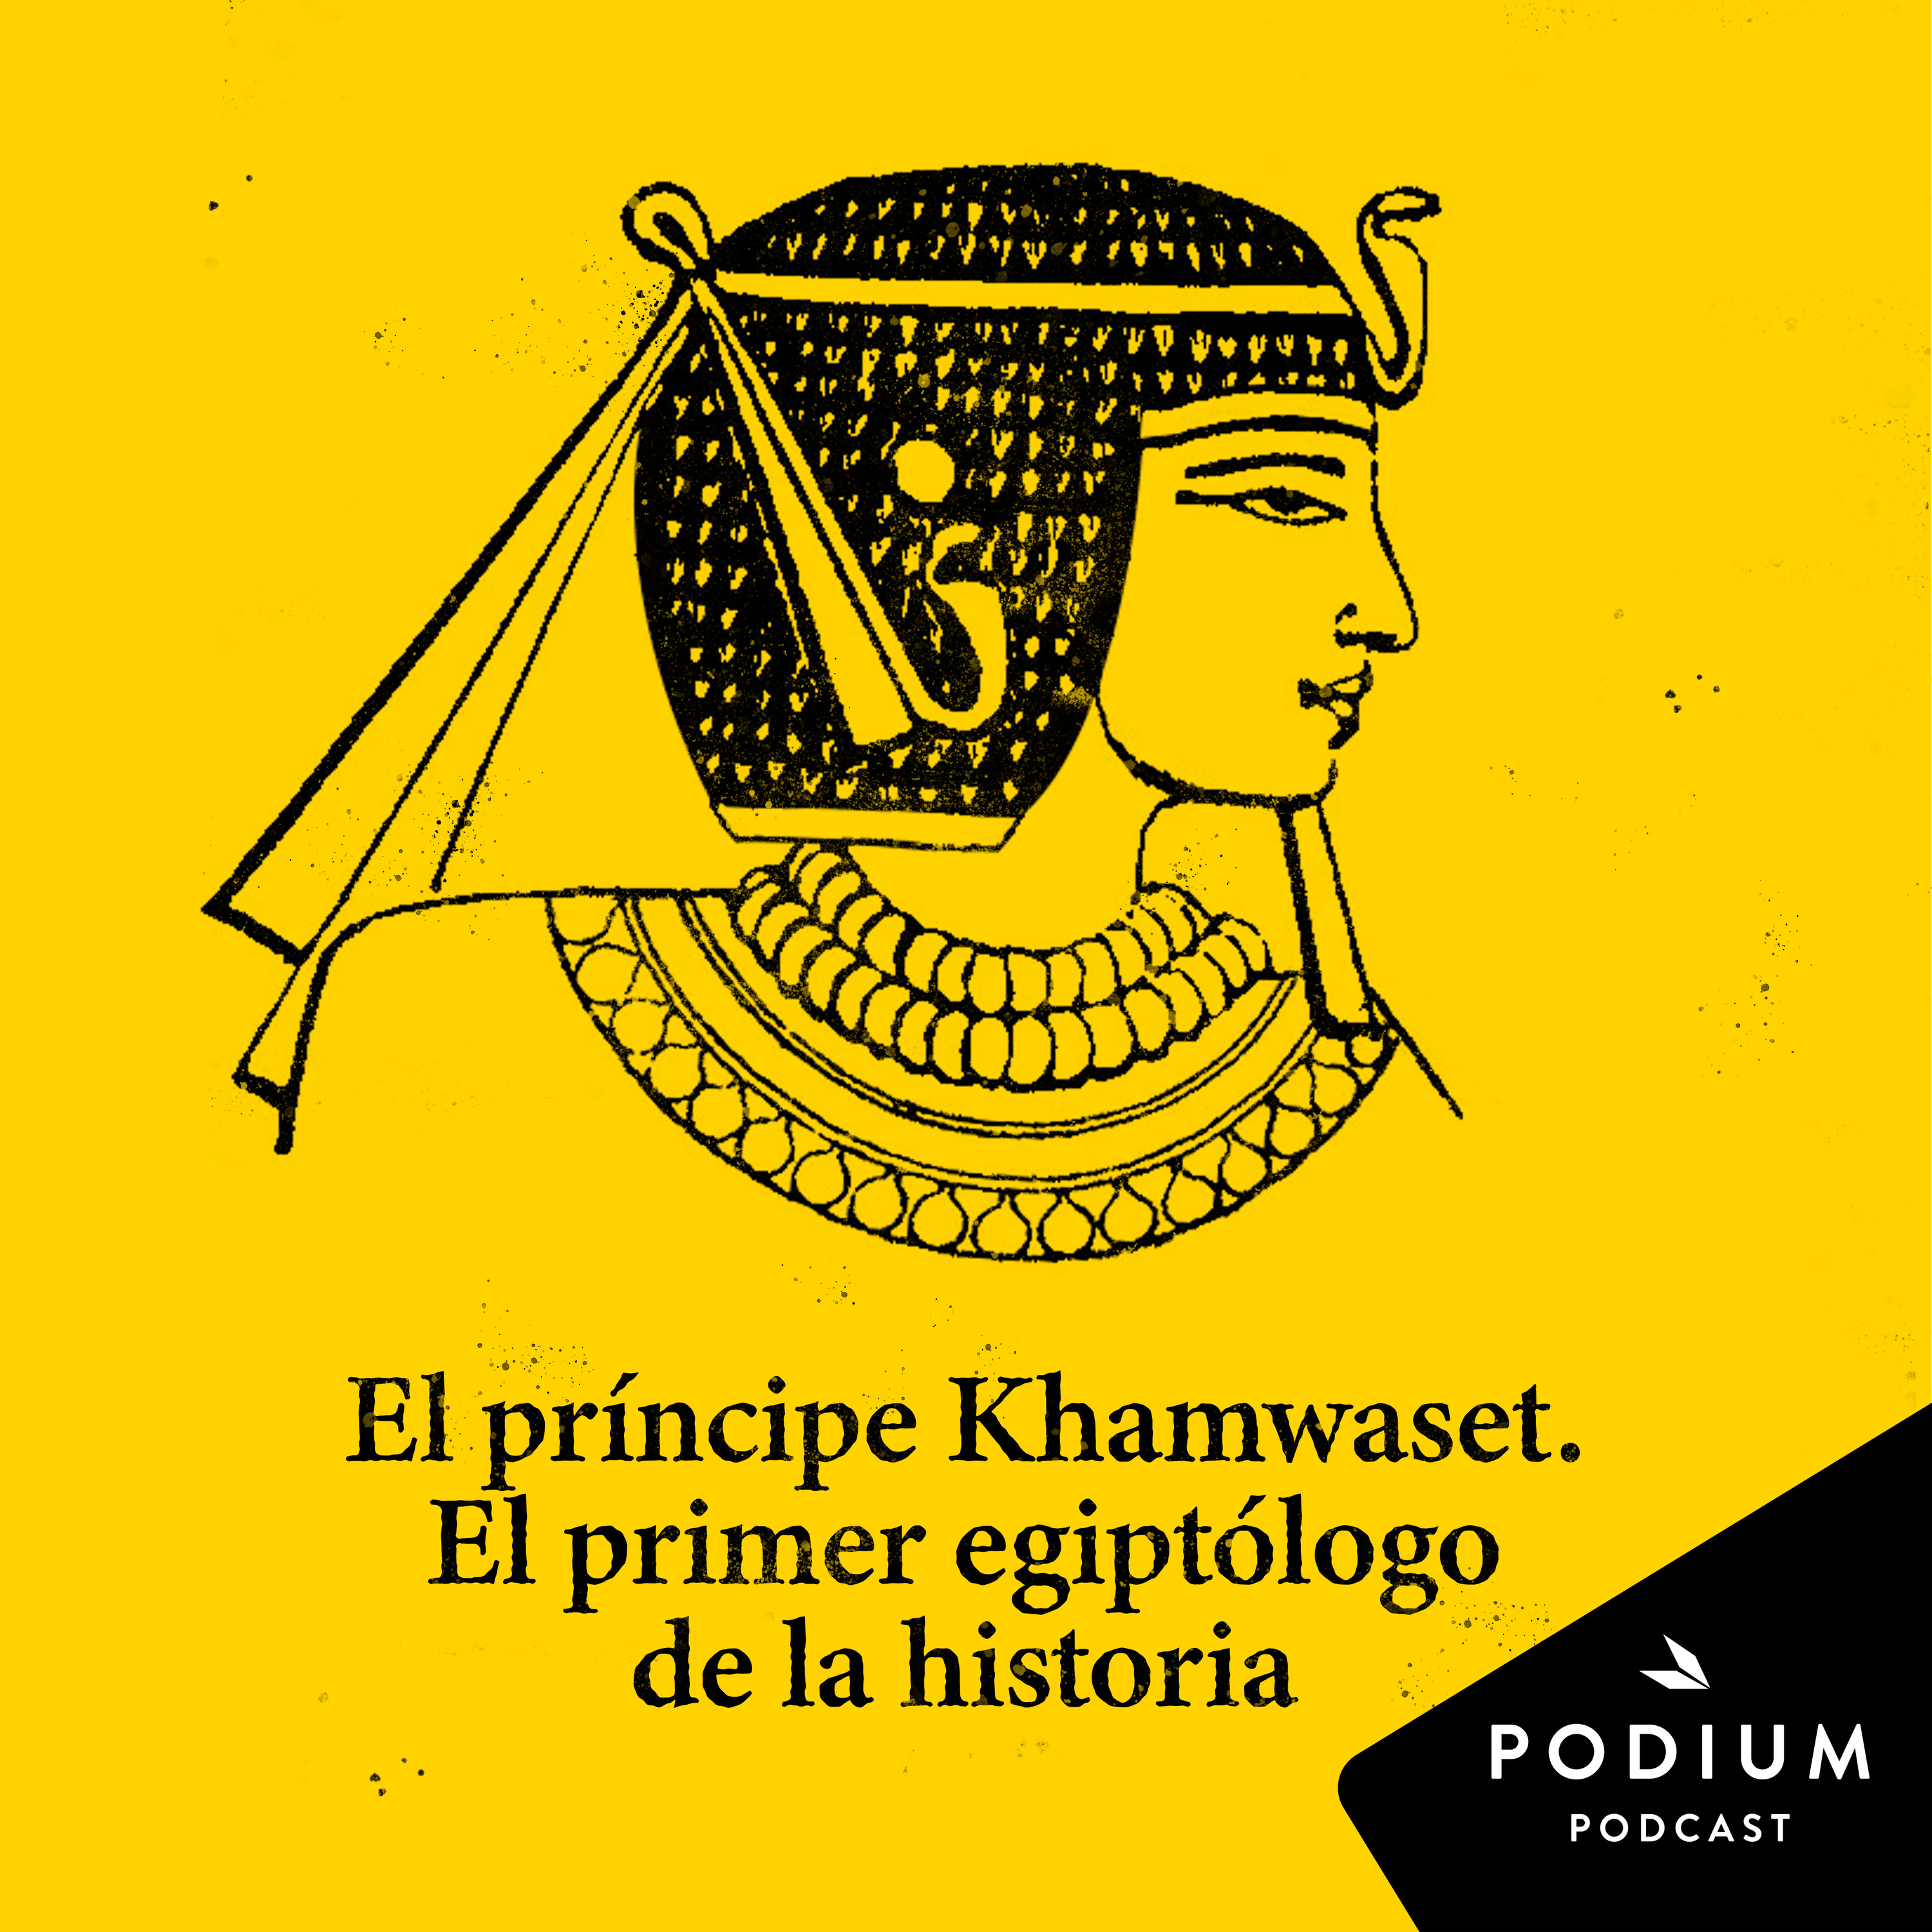 El príncipe Khamwaset. El primer egiptólogo de la historia